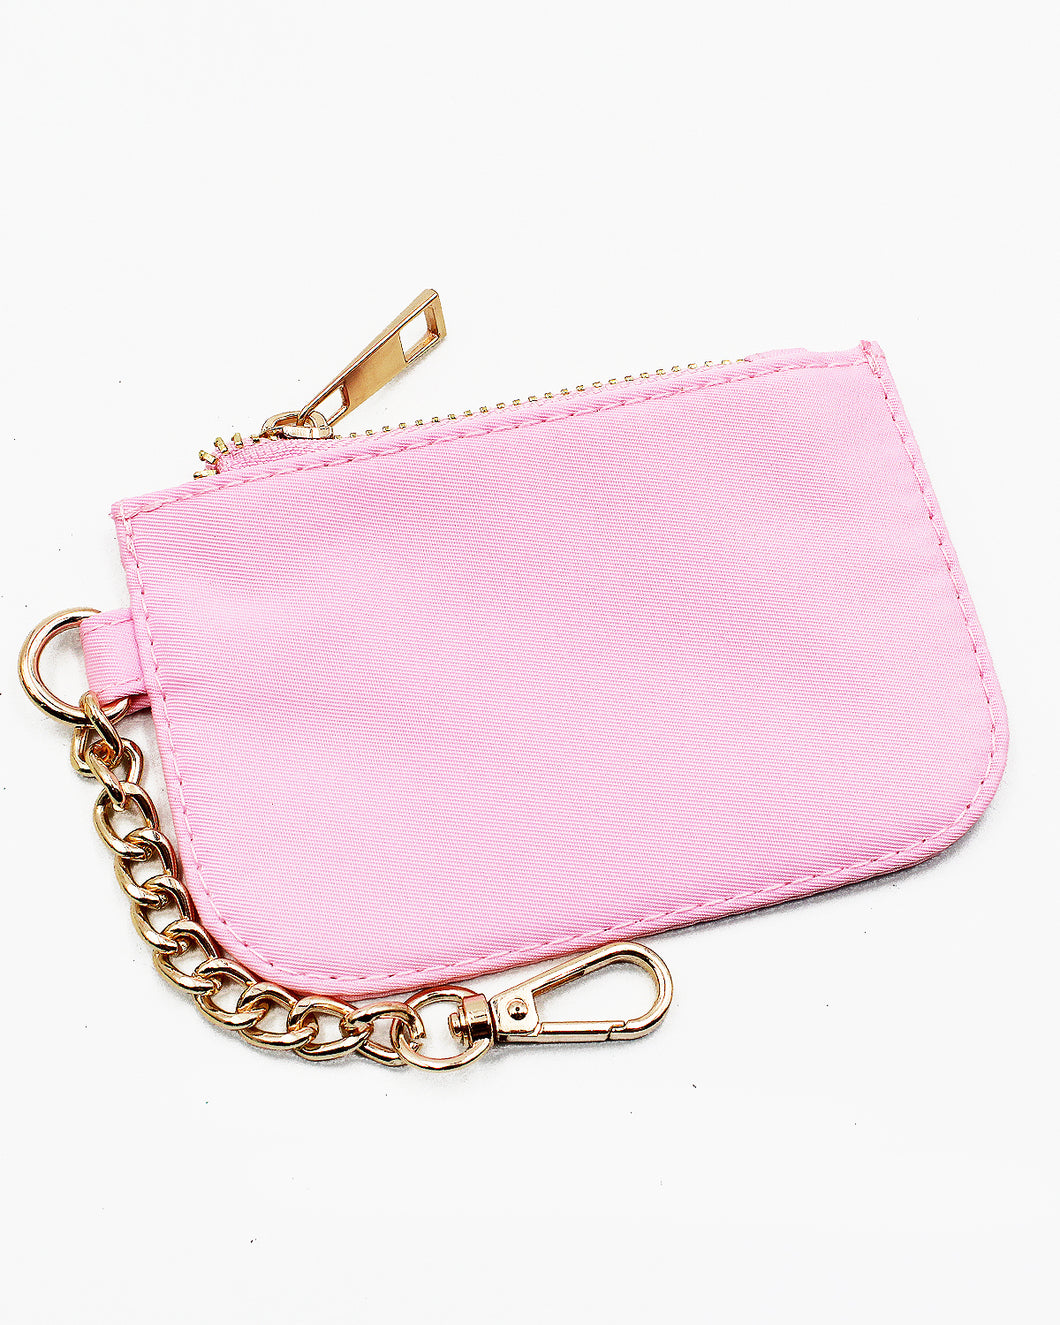 Nylon Zipper Wallet with Key Clasp Holder